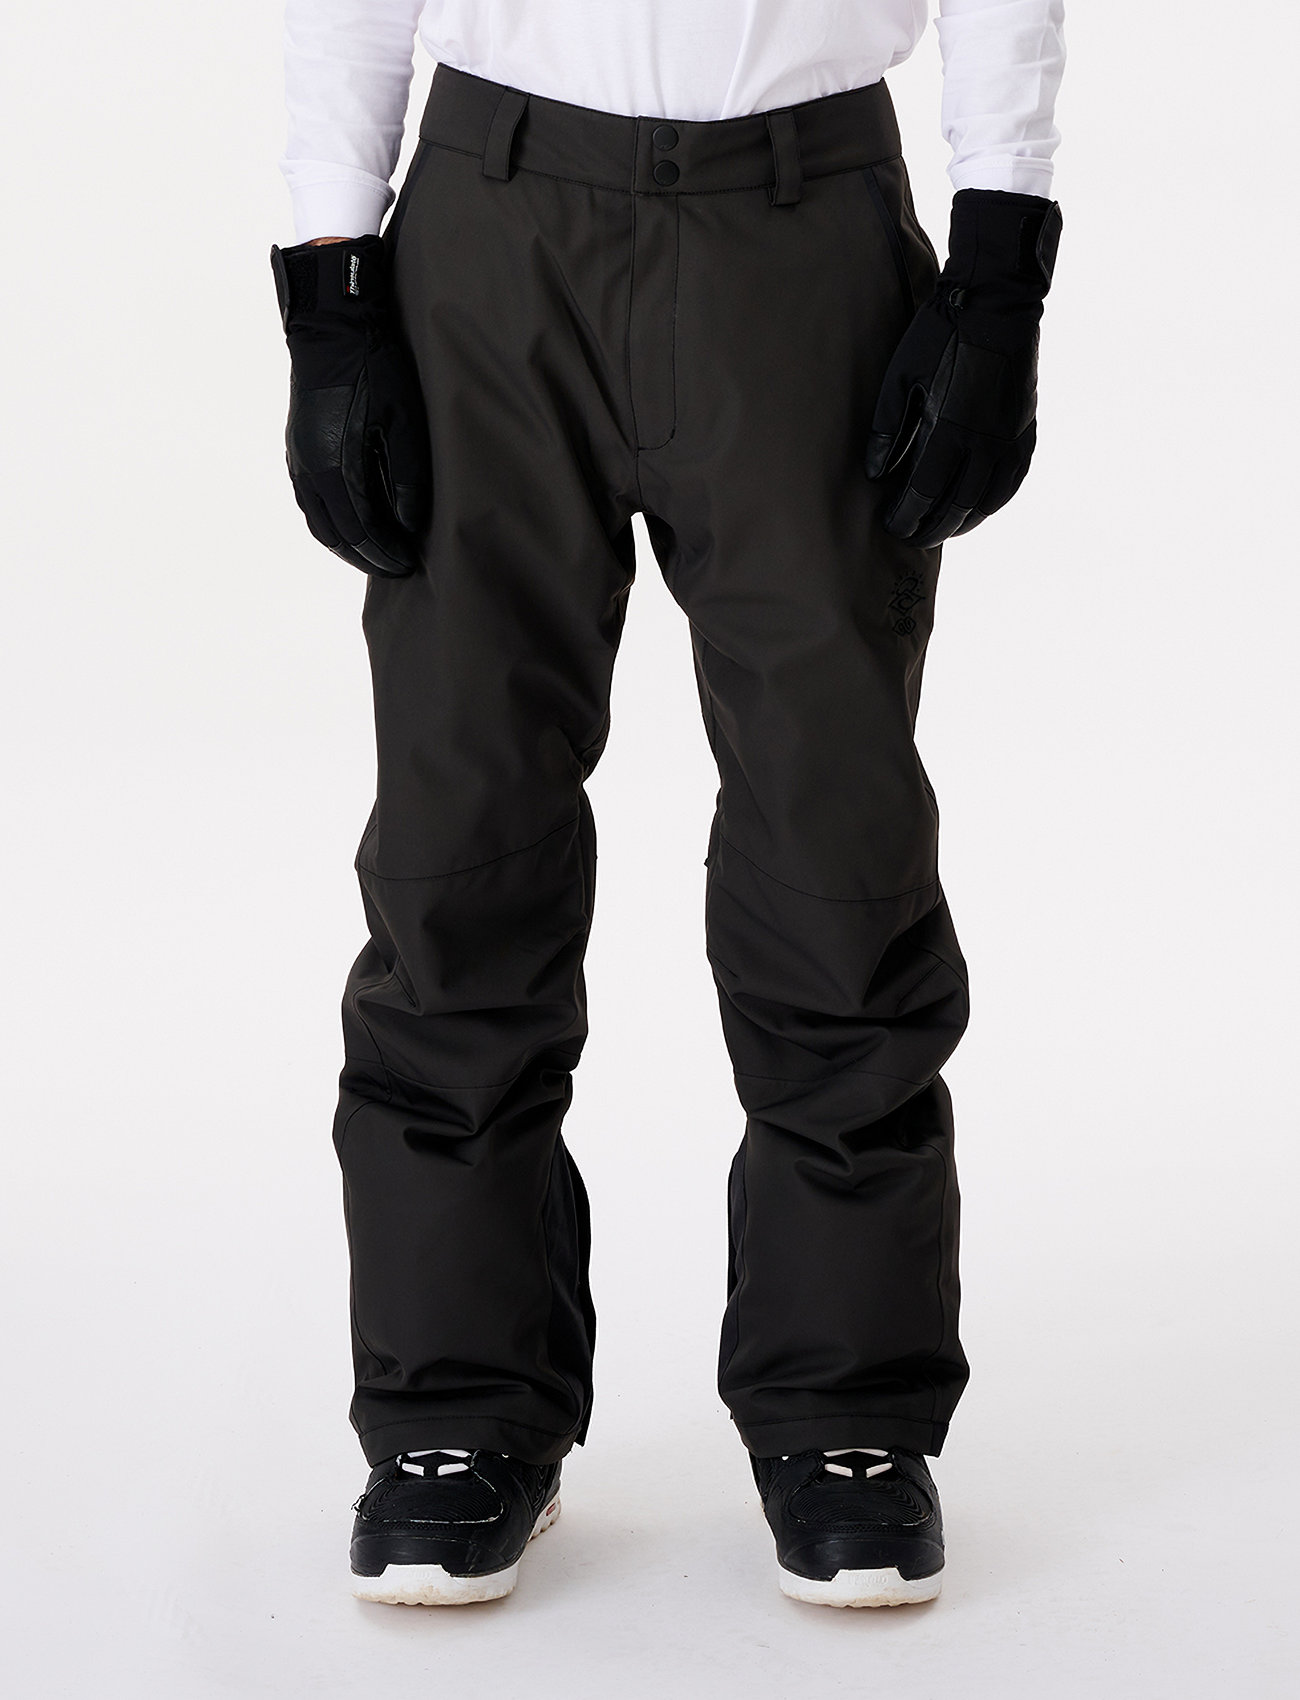 Rip Curl - ROCKER PANT - hiihto- & lasketteluhousut - black - 0